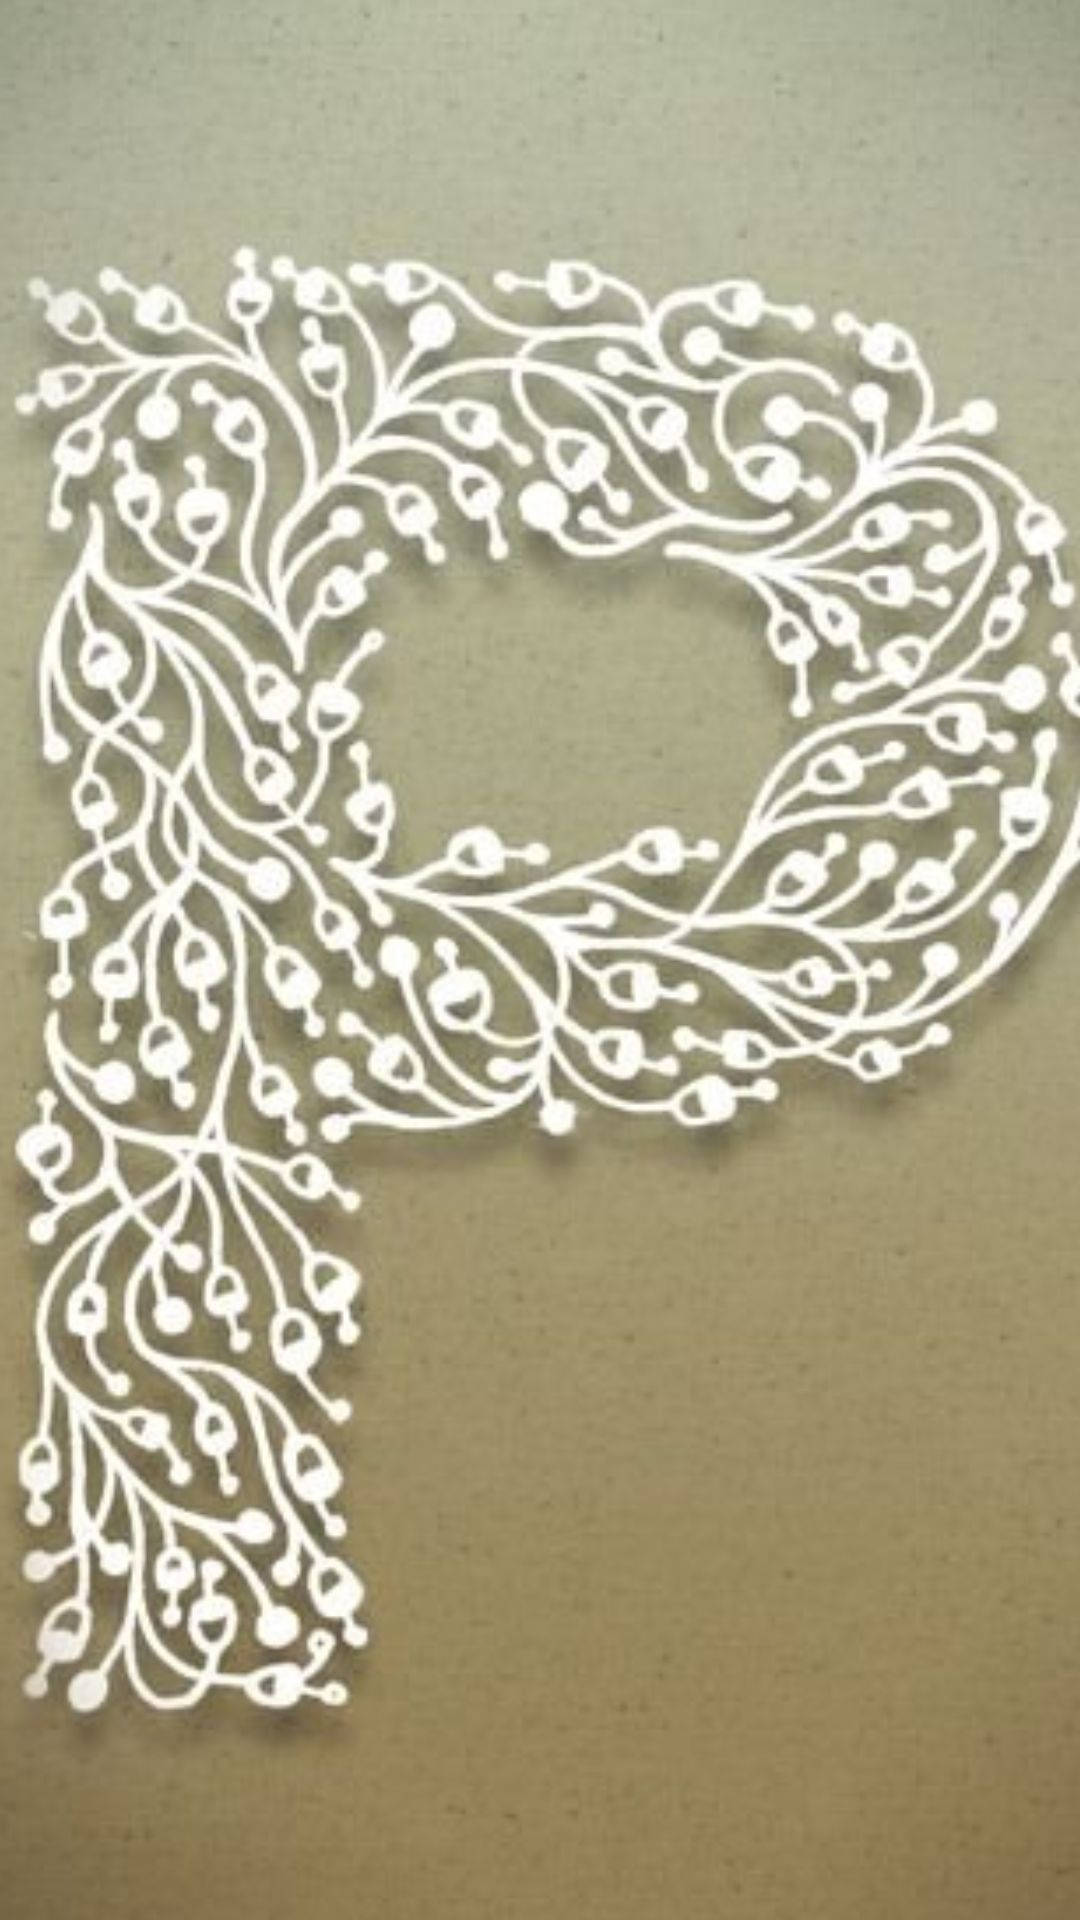 Floral Monogram Letter P Wallpaper